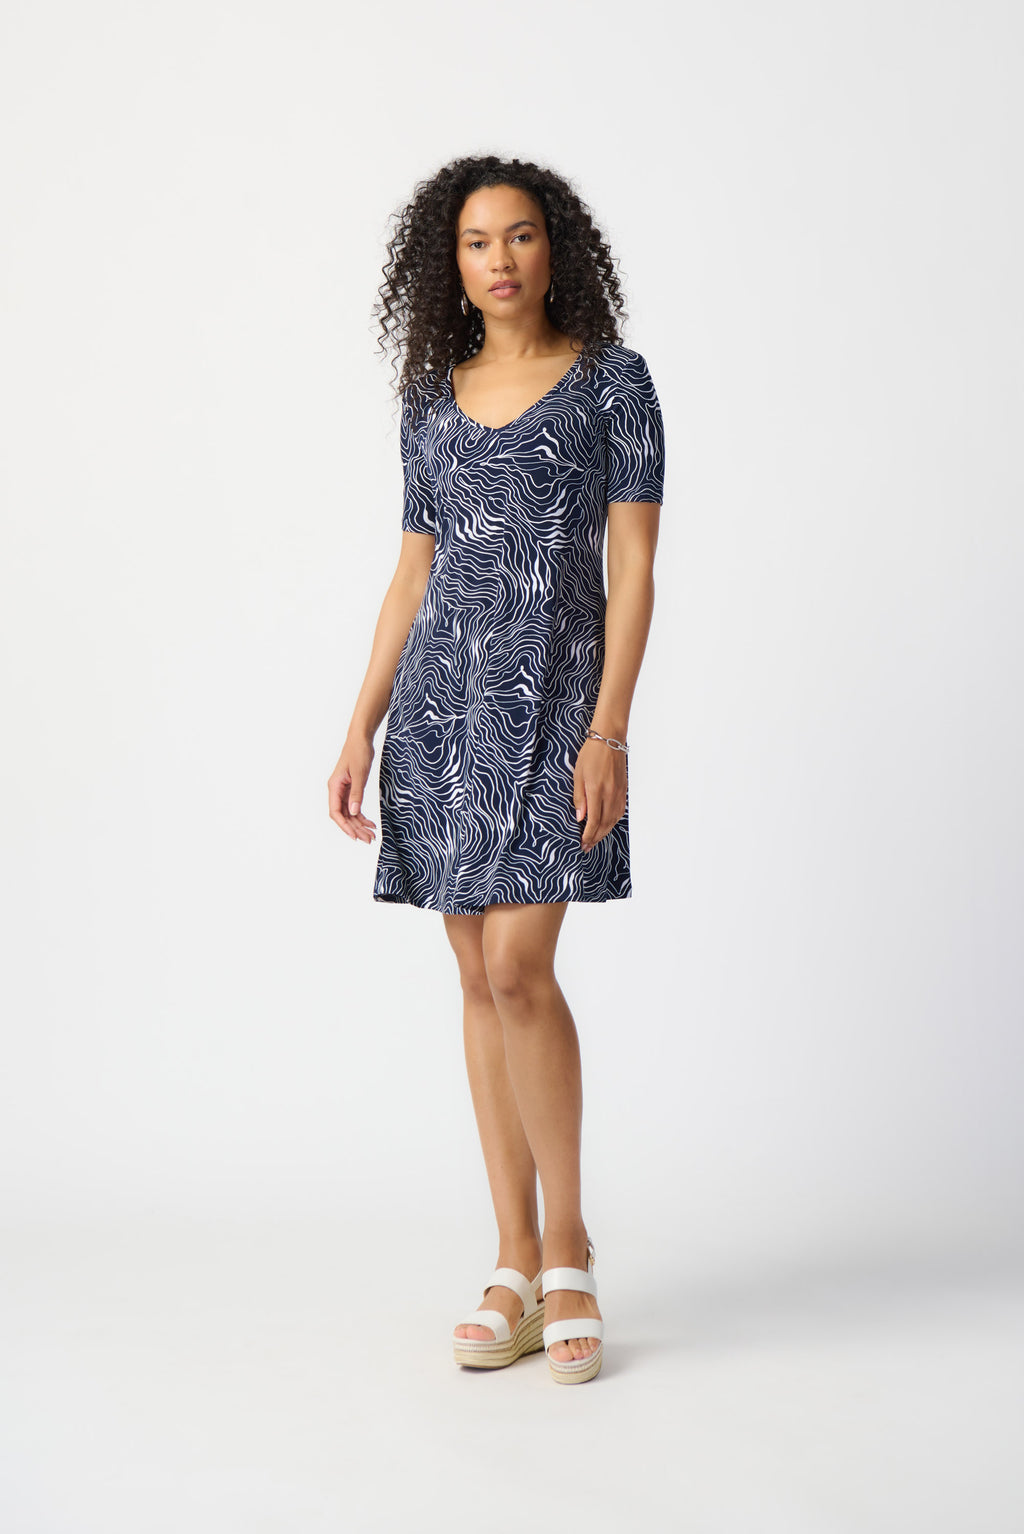 Joseph Ribkoff Midnight Blue/Vanilla Abstract Print Puff A-Line Dress Style 241293